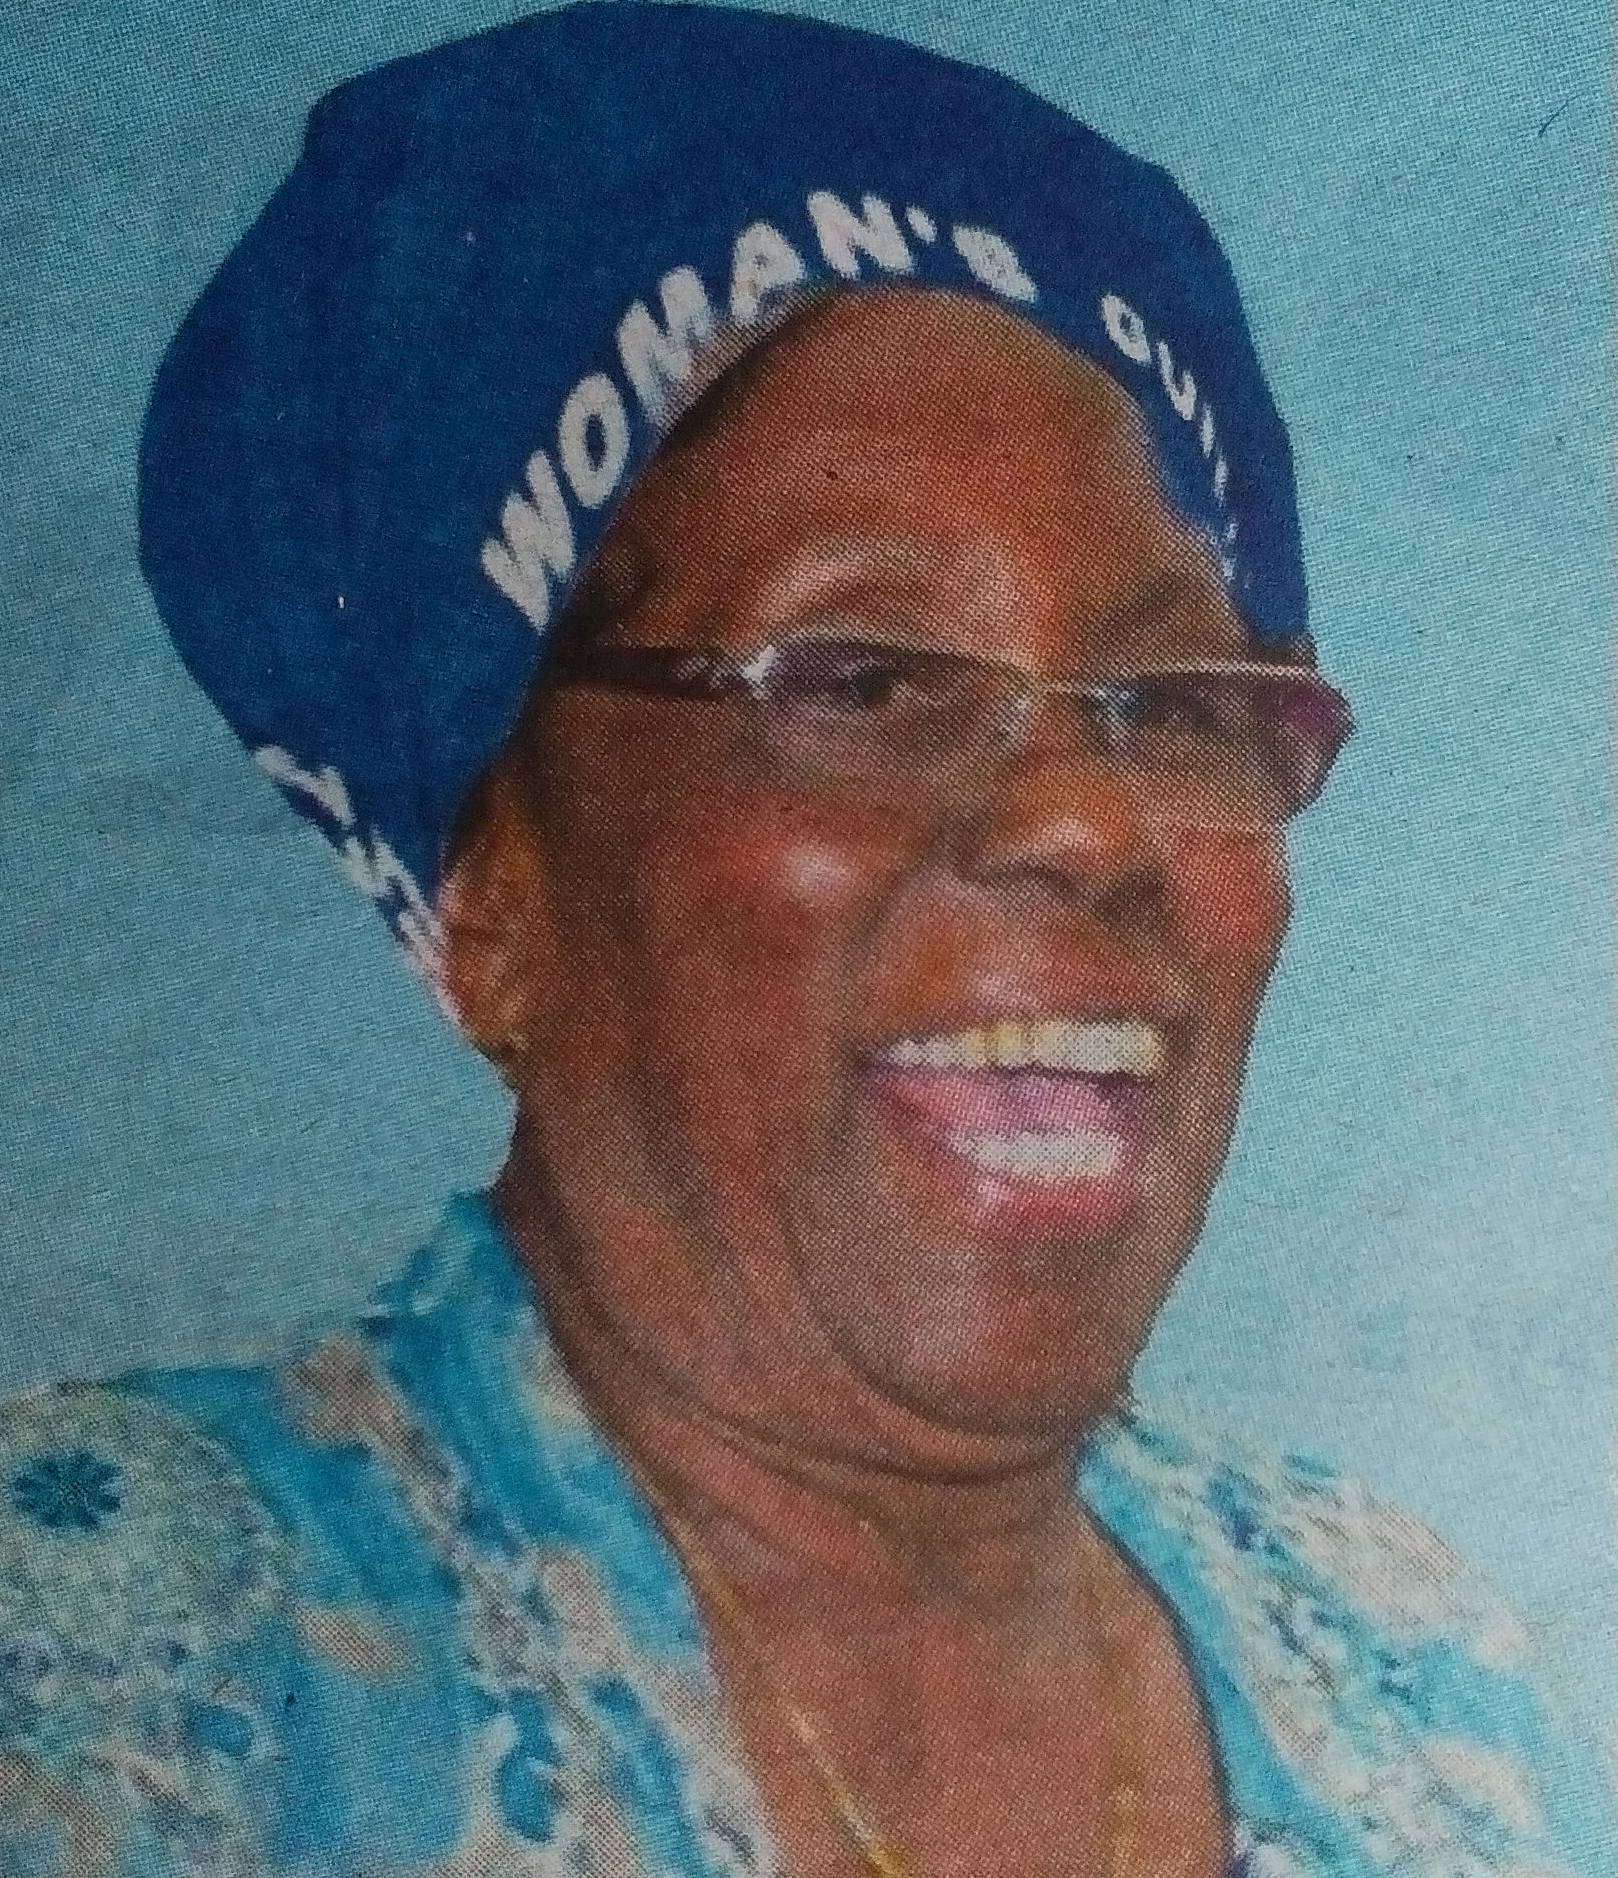 Obituary Image of Christine Mithiri Mbugua (Nyina wa Fundi)